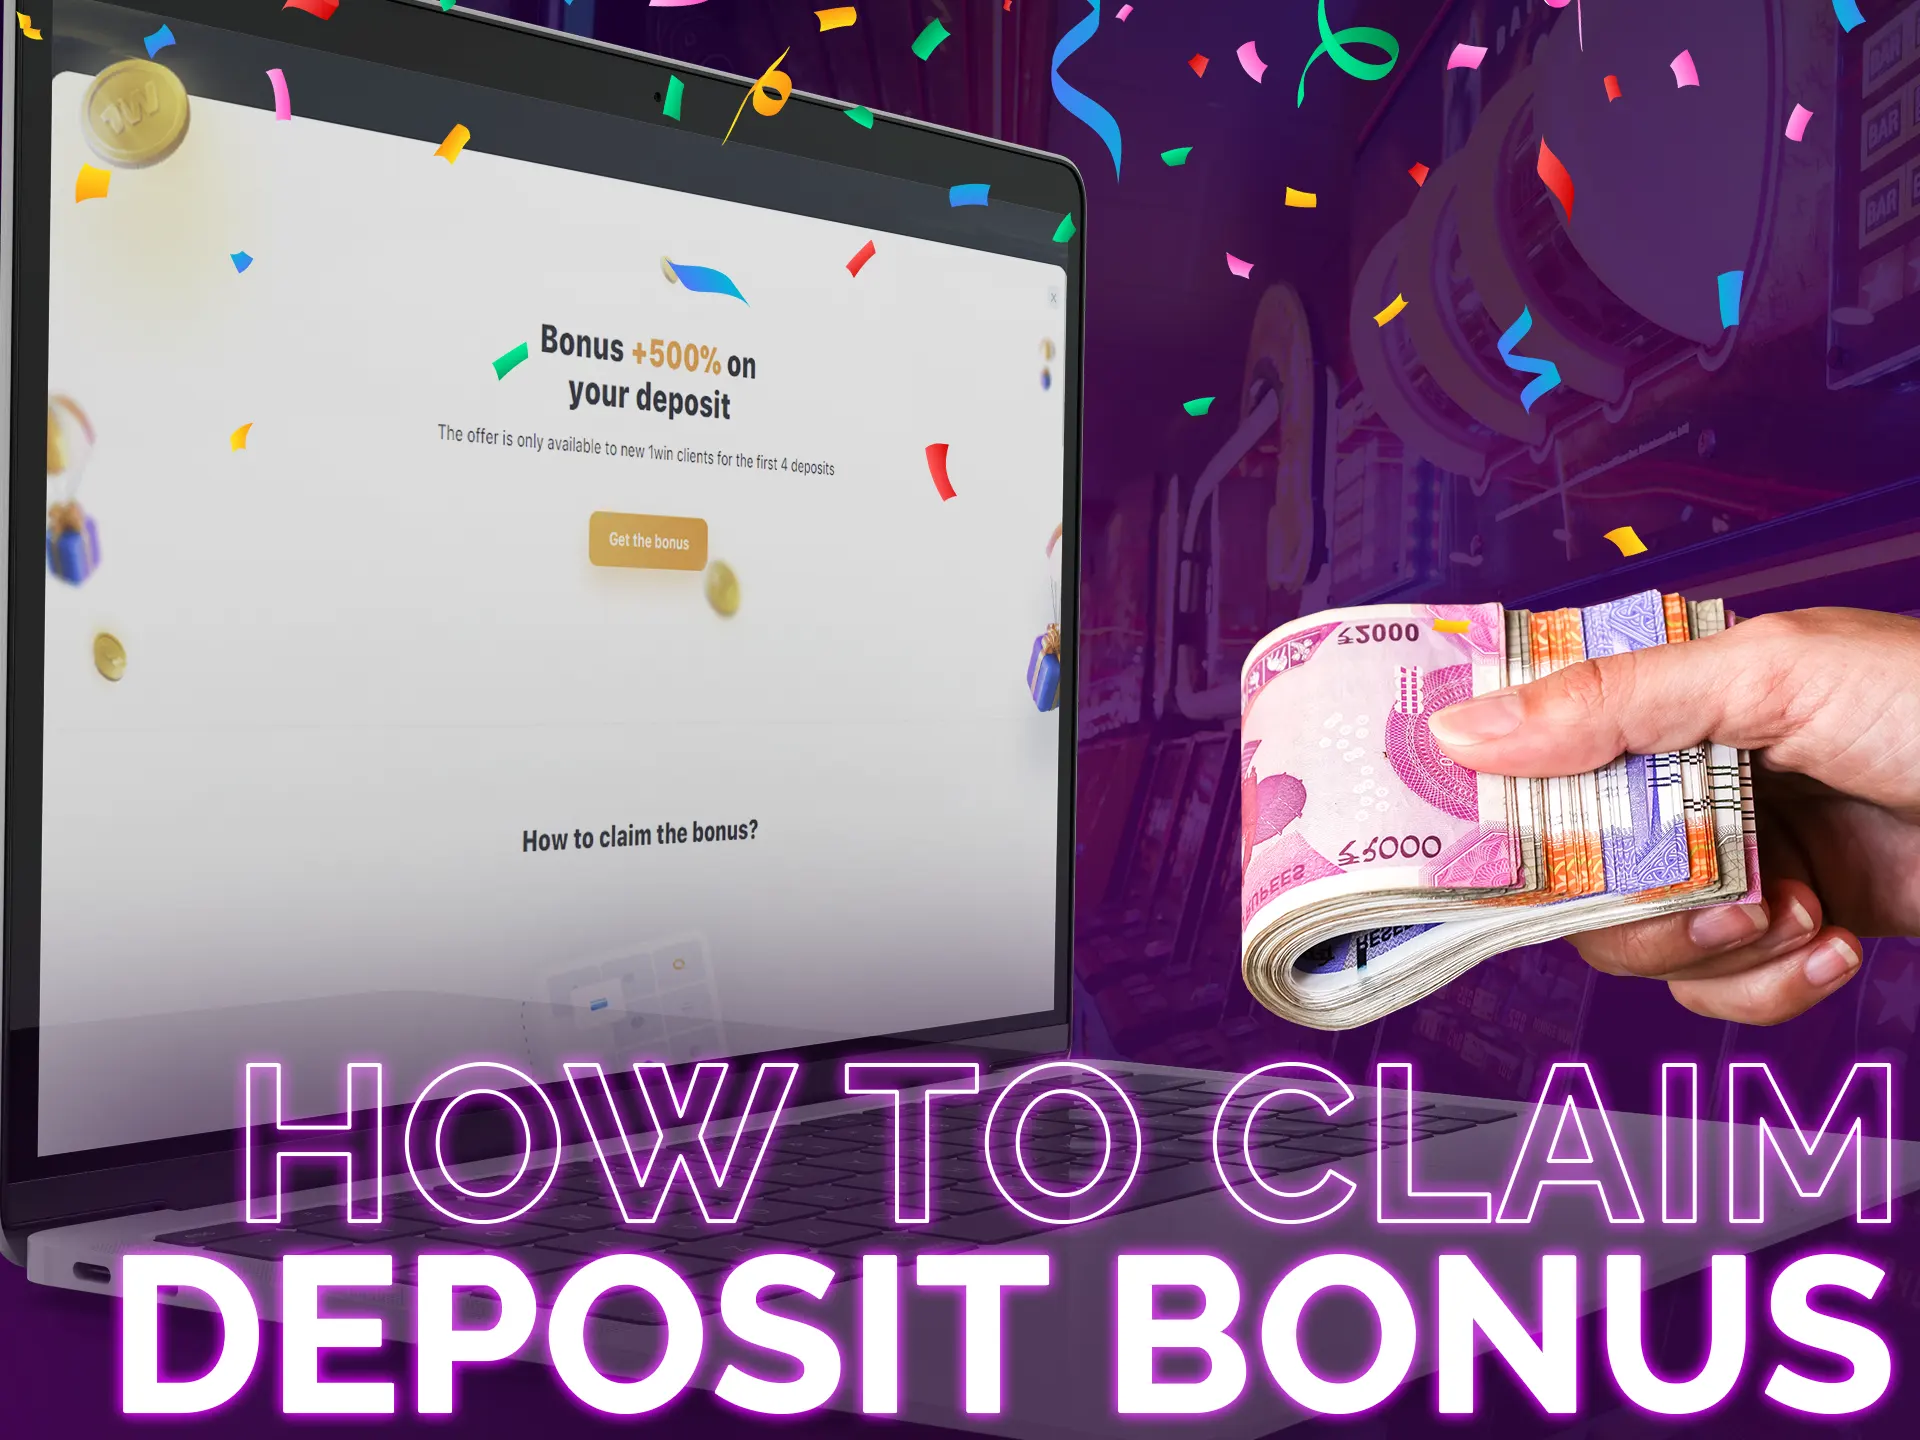 Learn how to claim deposit bonuses.